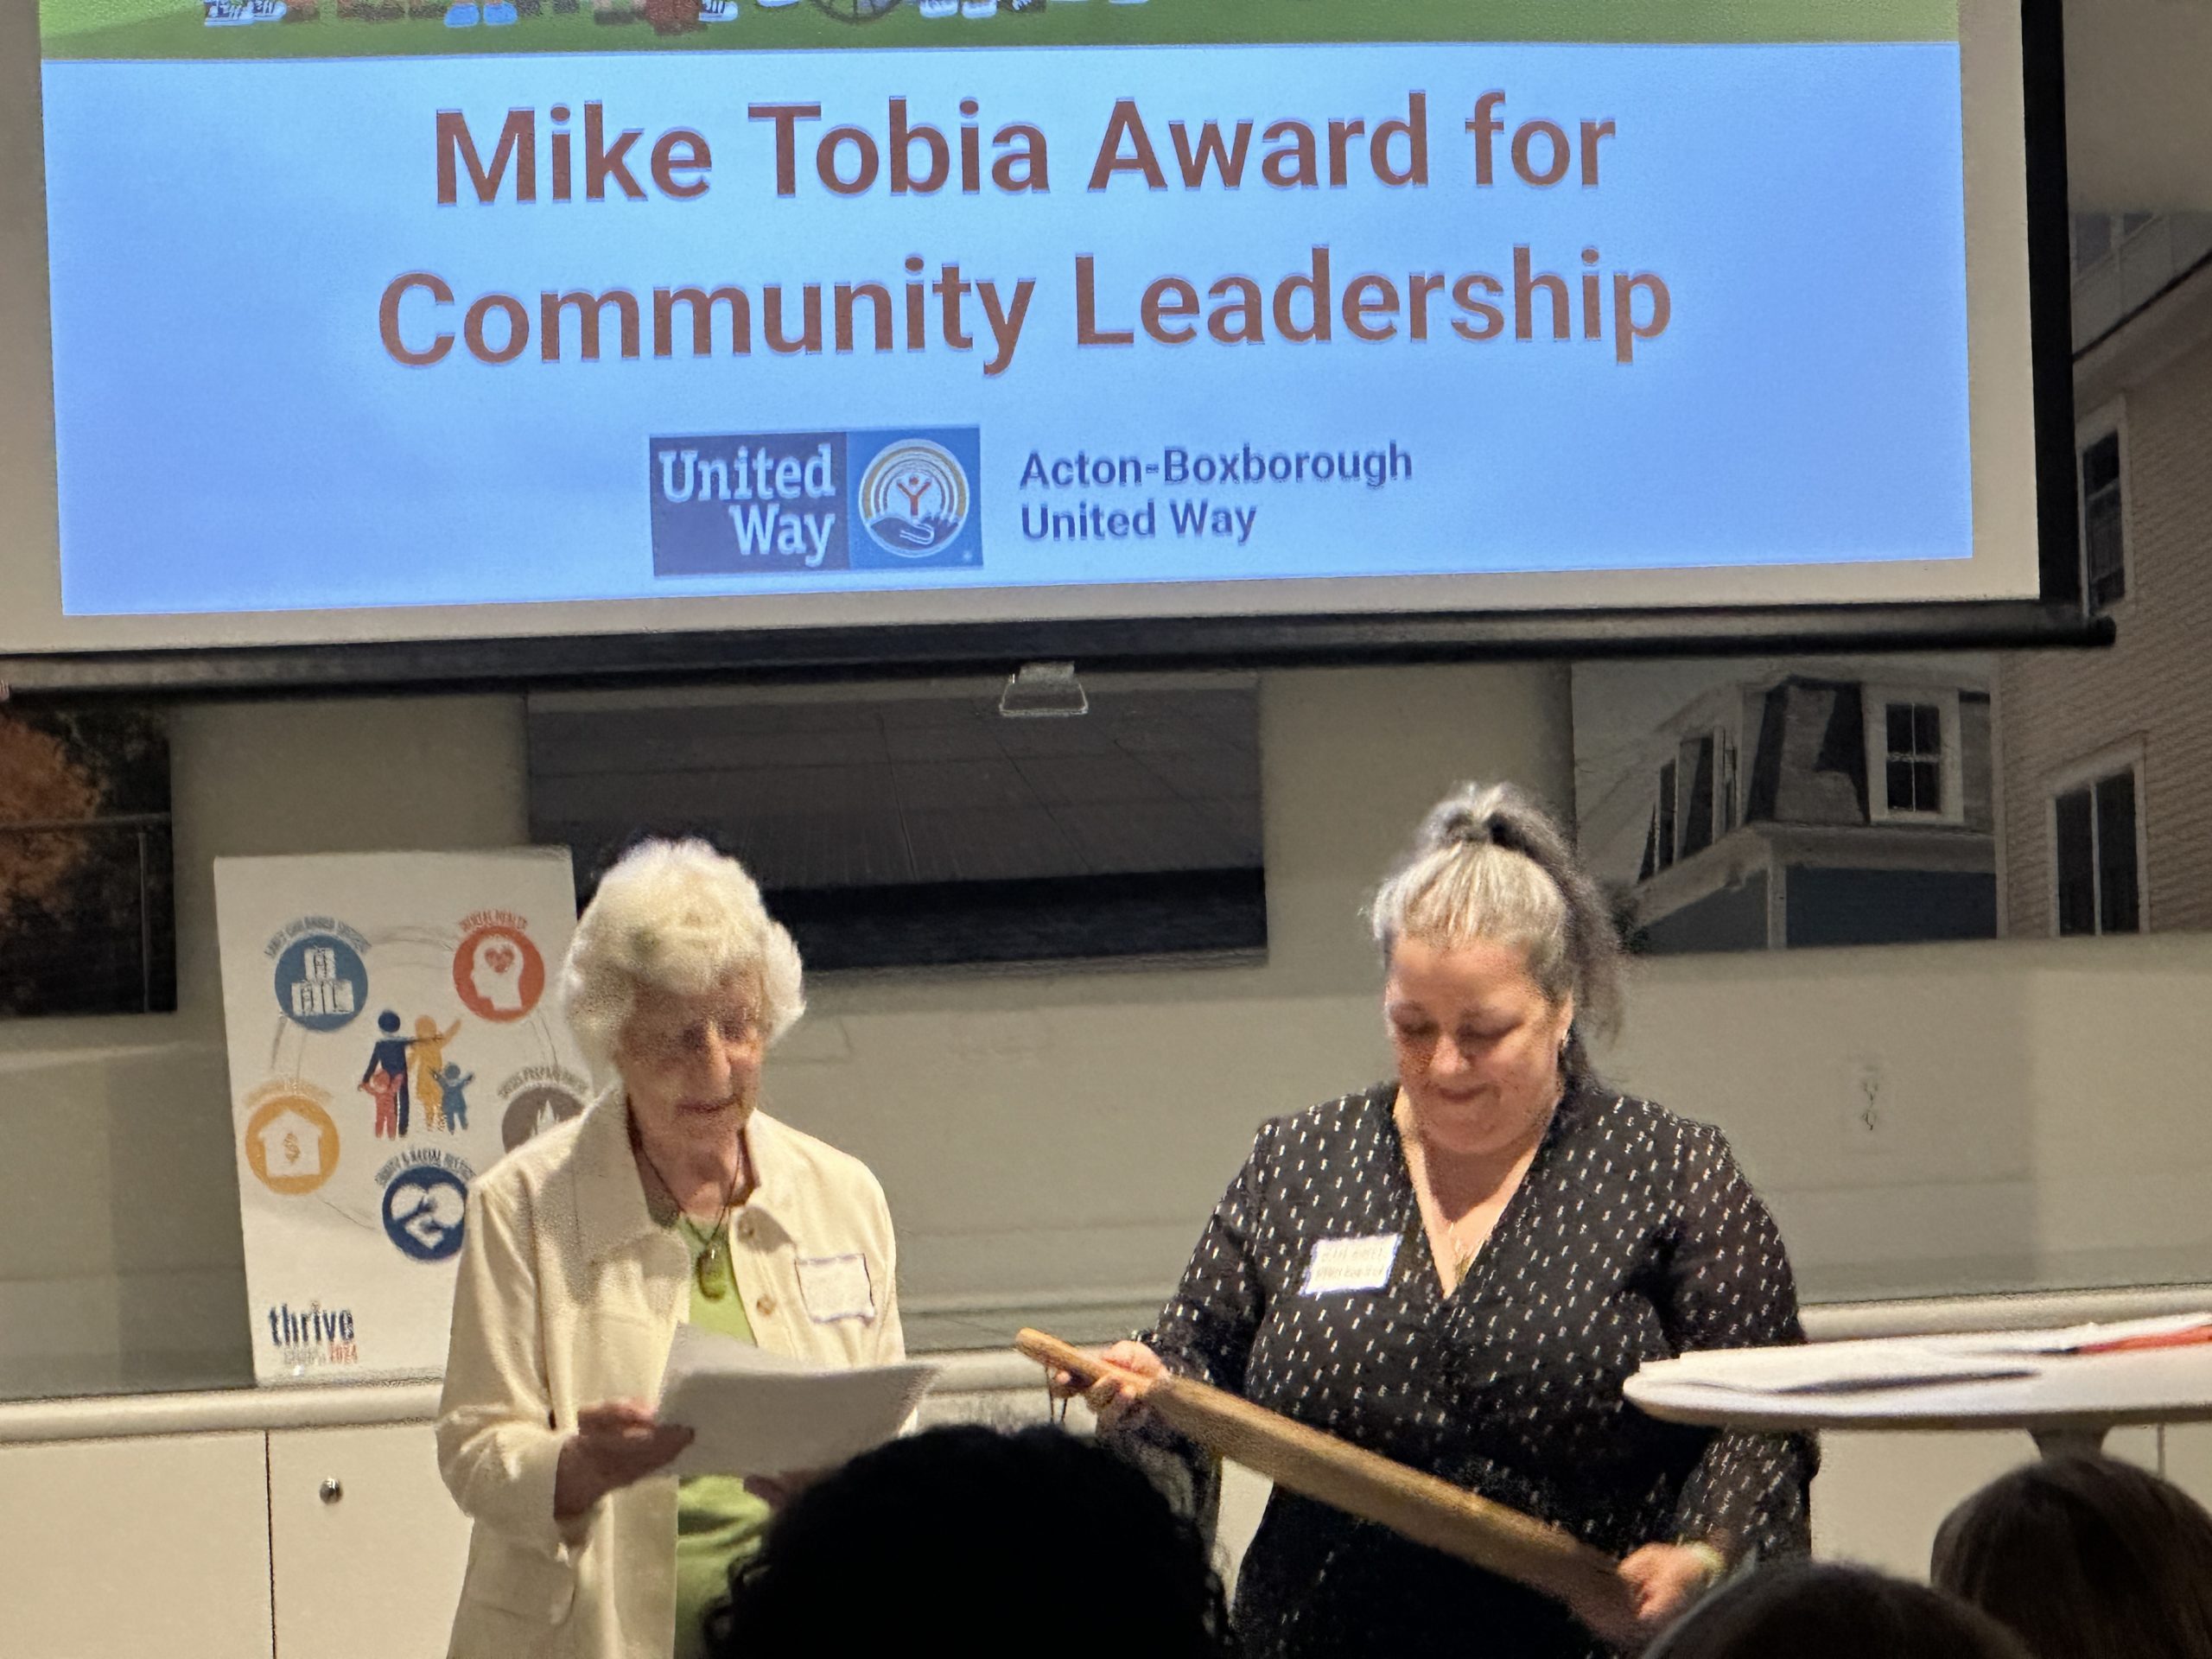 Mike Tobia Award for Community Leadership